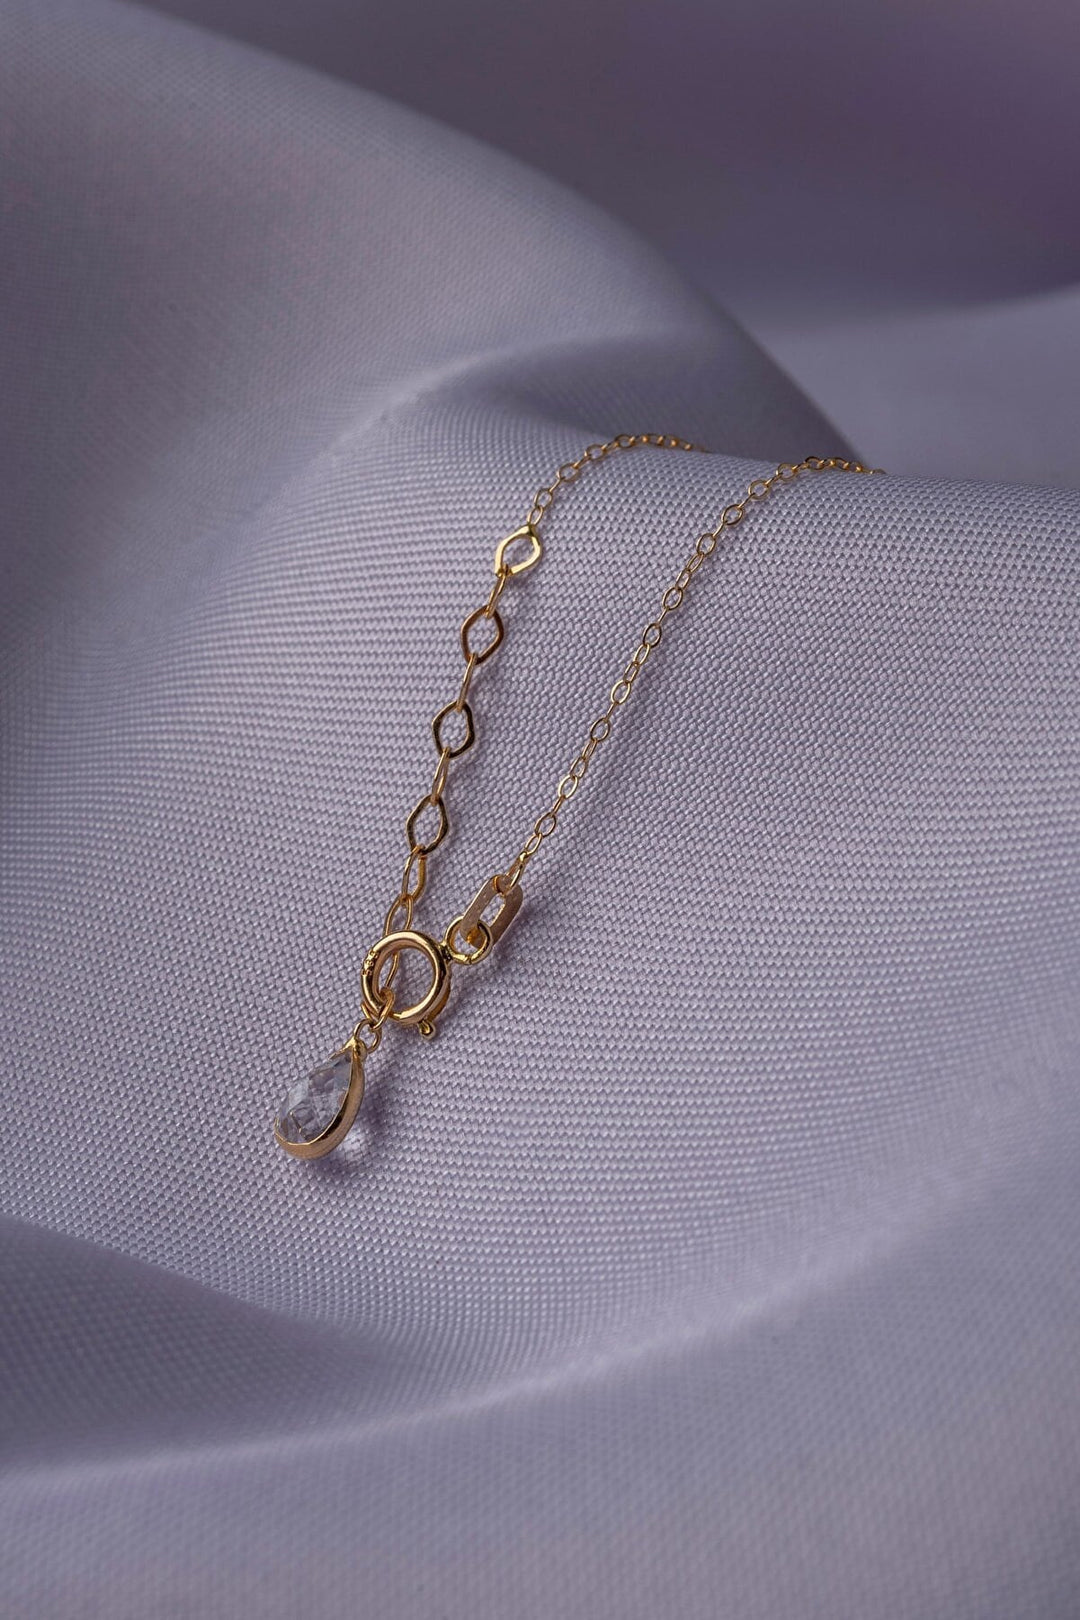 14 Carat Gold Star Necklace - strkol120